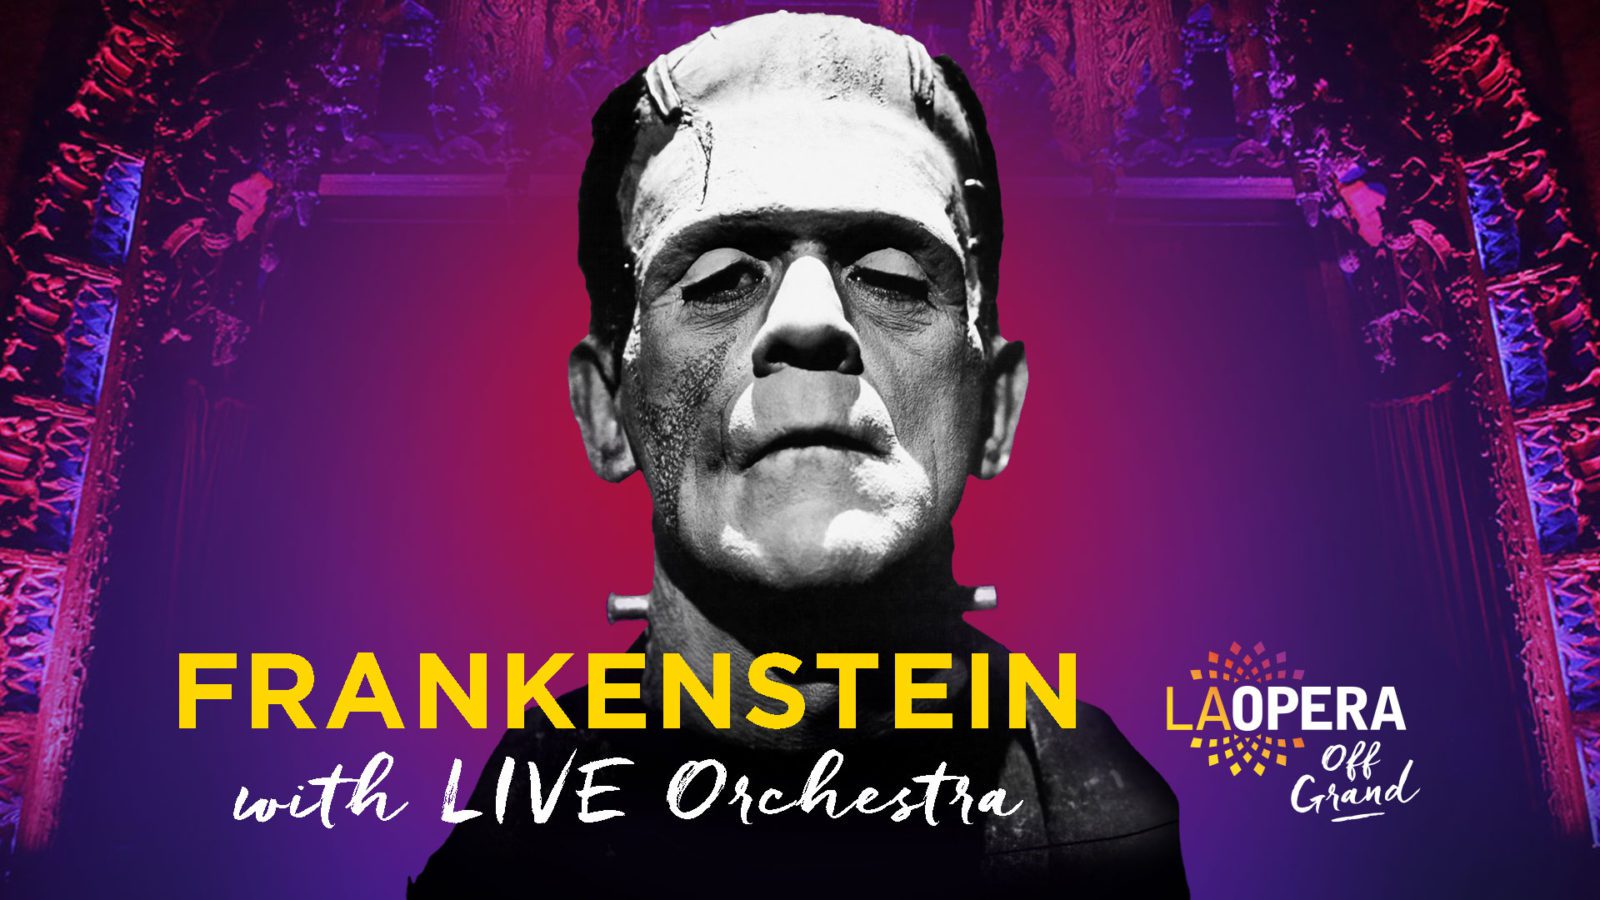 Frankenstein with Live Orchestra promo